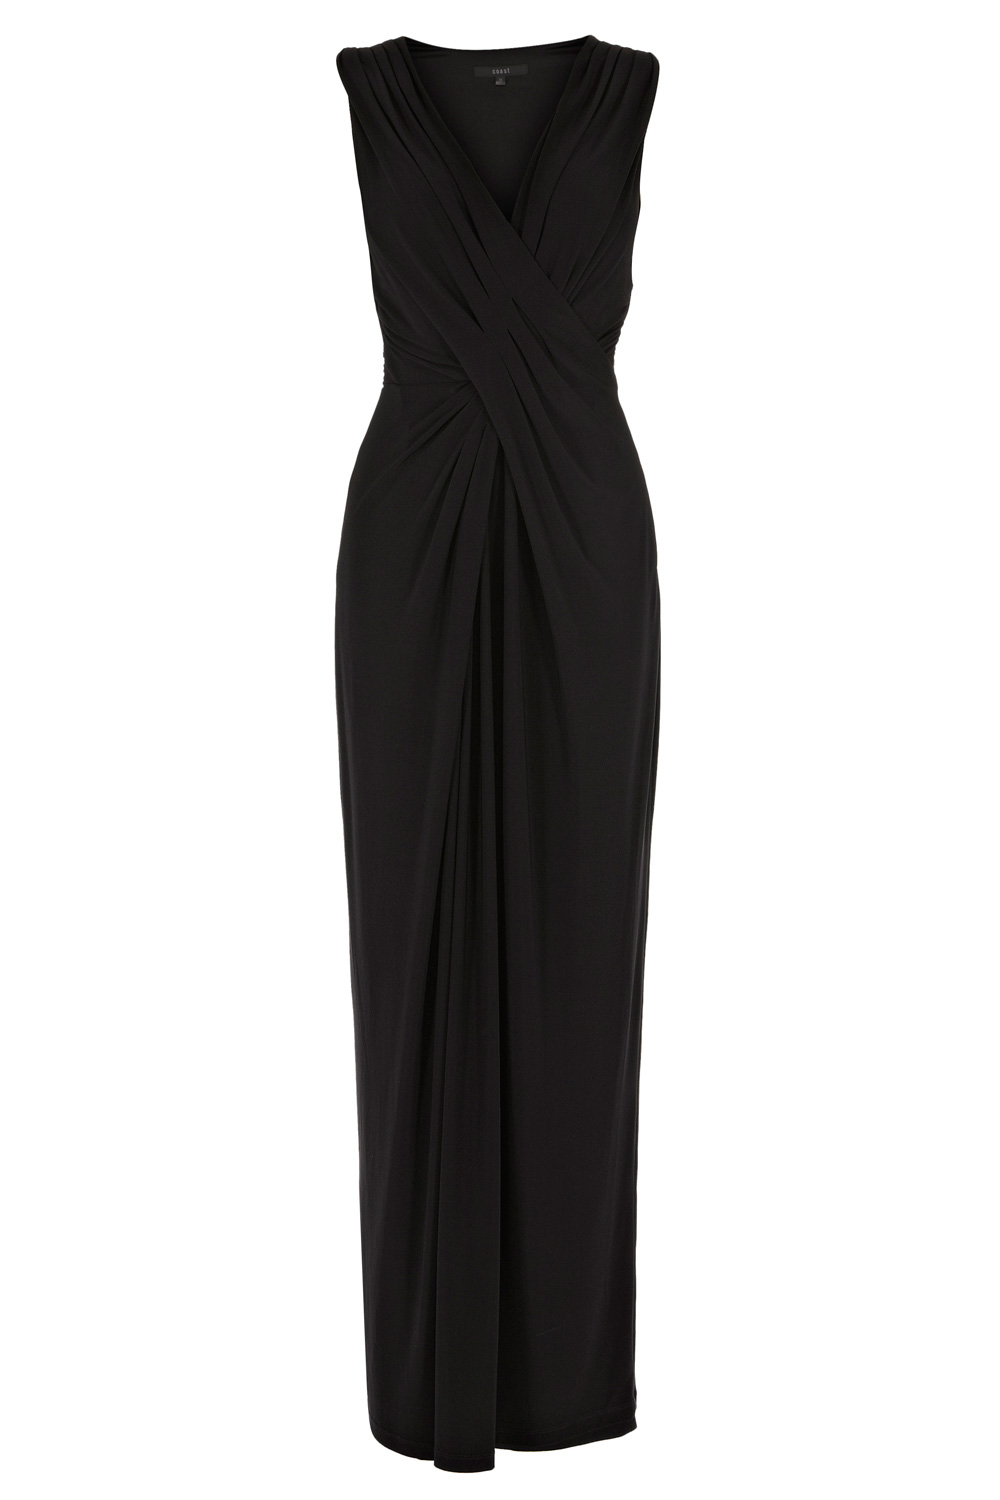 Lyst - Coast Mona Jersey Maxi Dress in Black